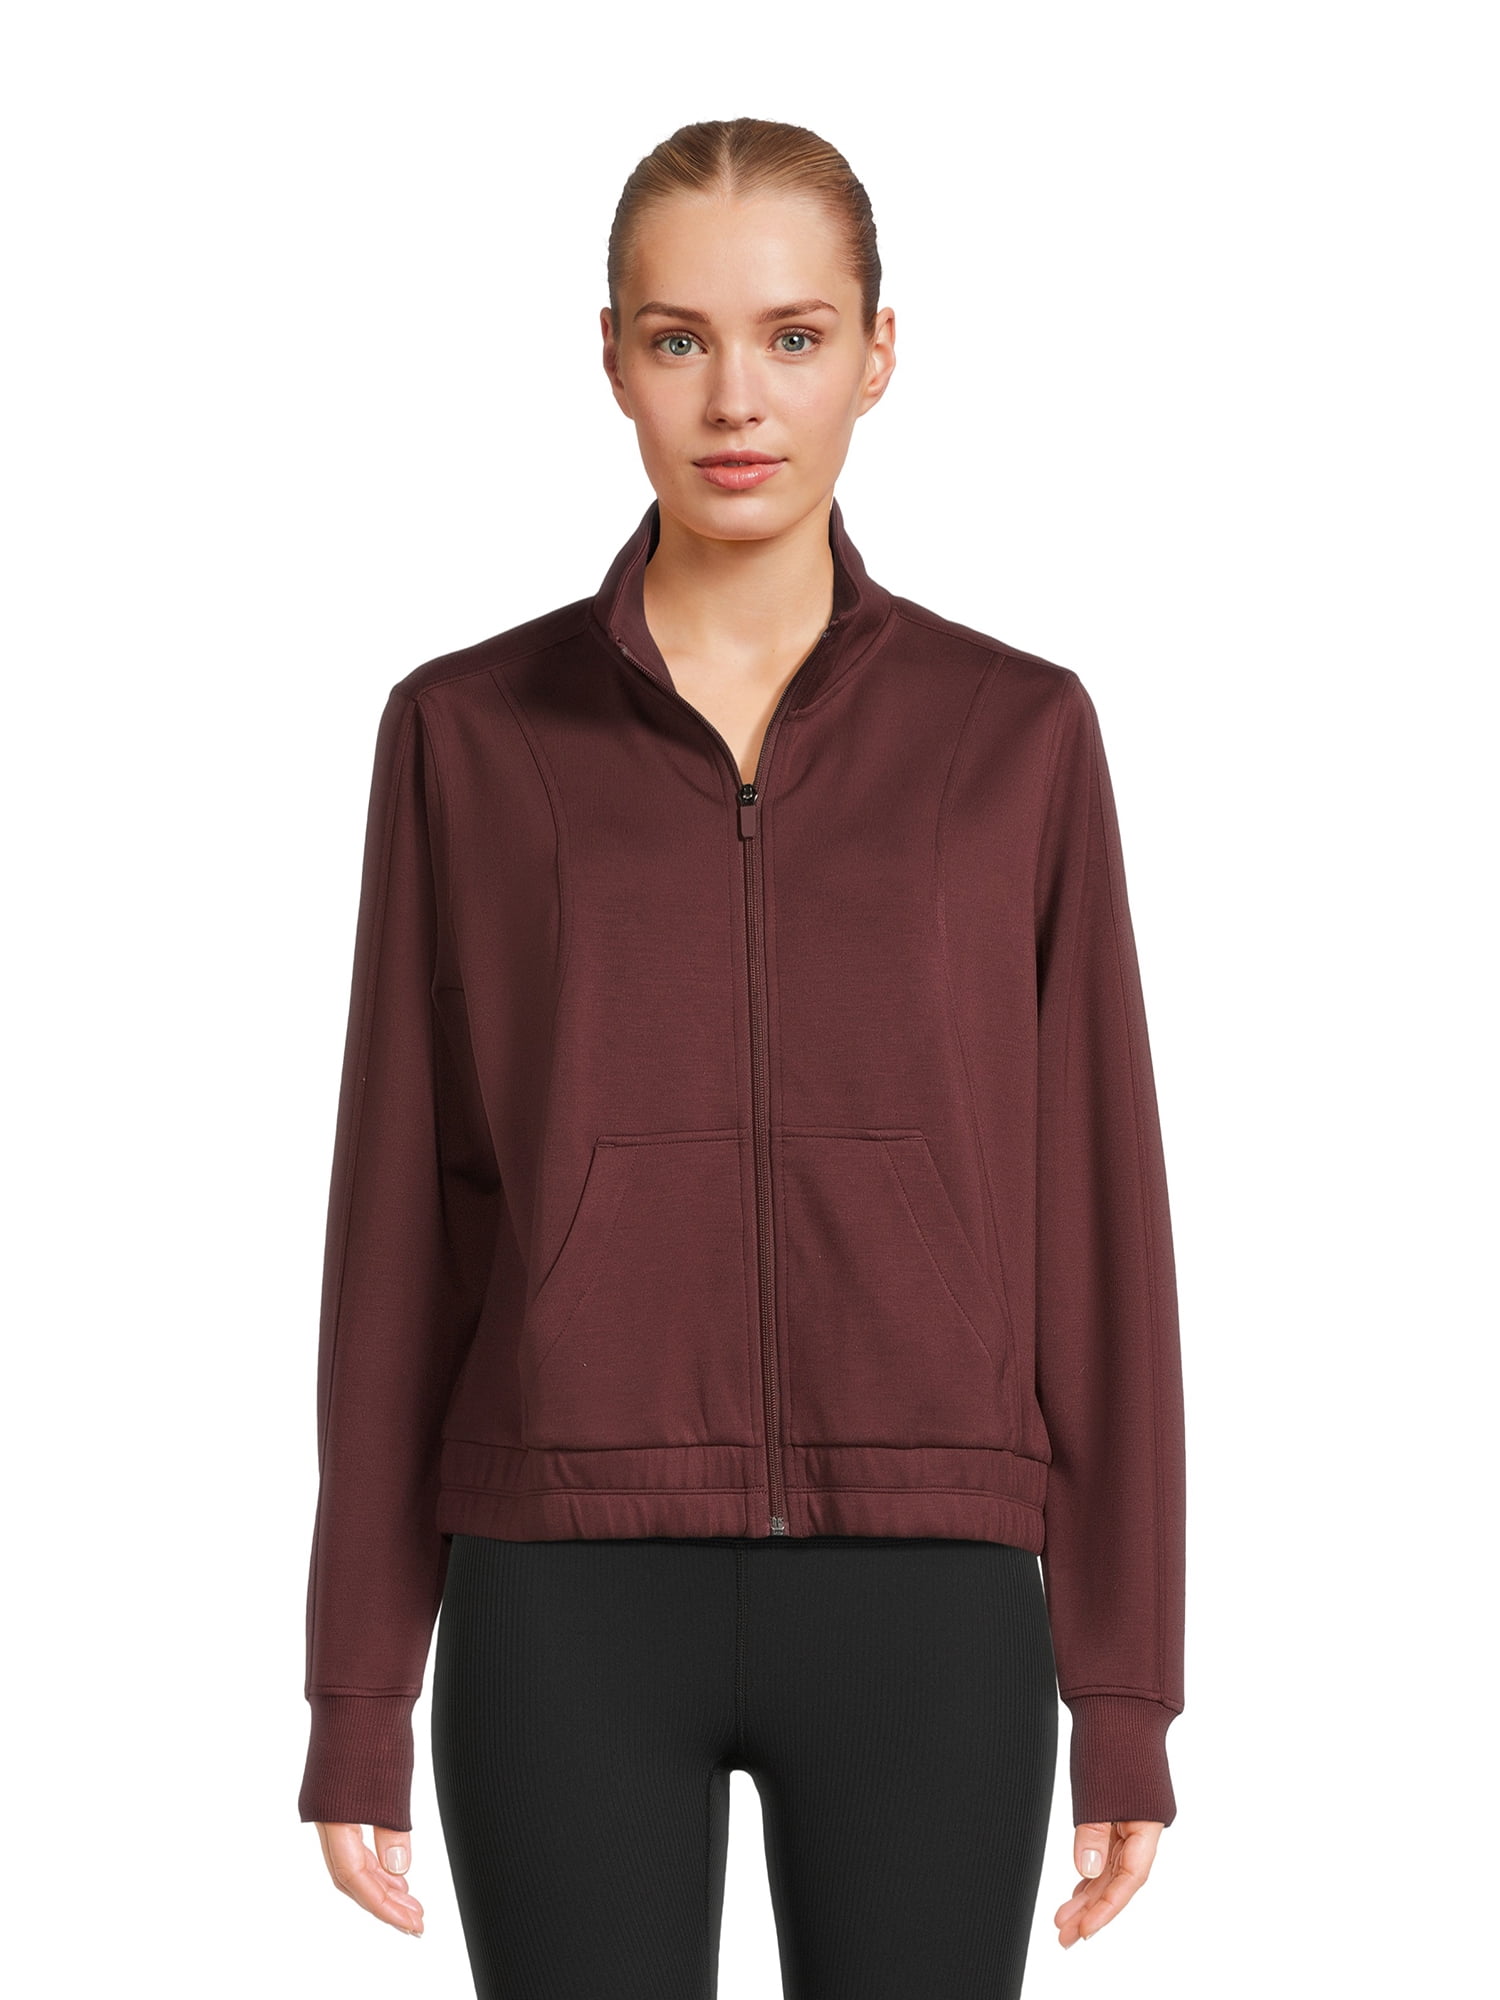 Avia Women’s Cold Weather Active Jacket, Sizes XS-XXXL